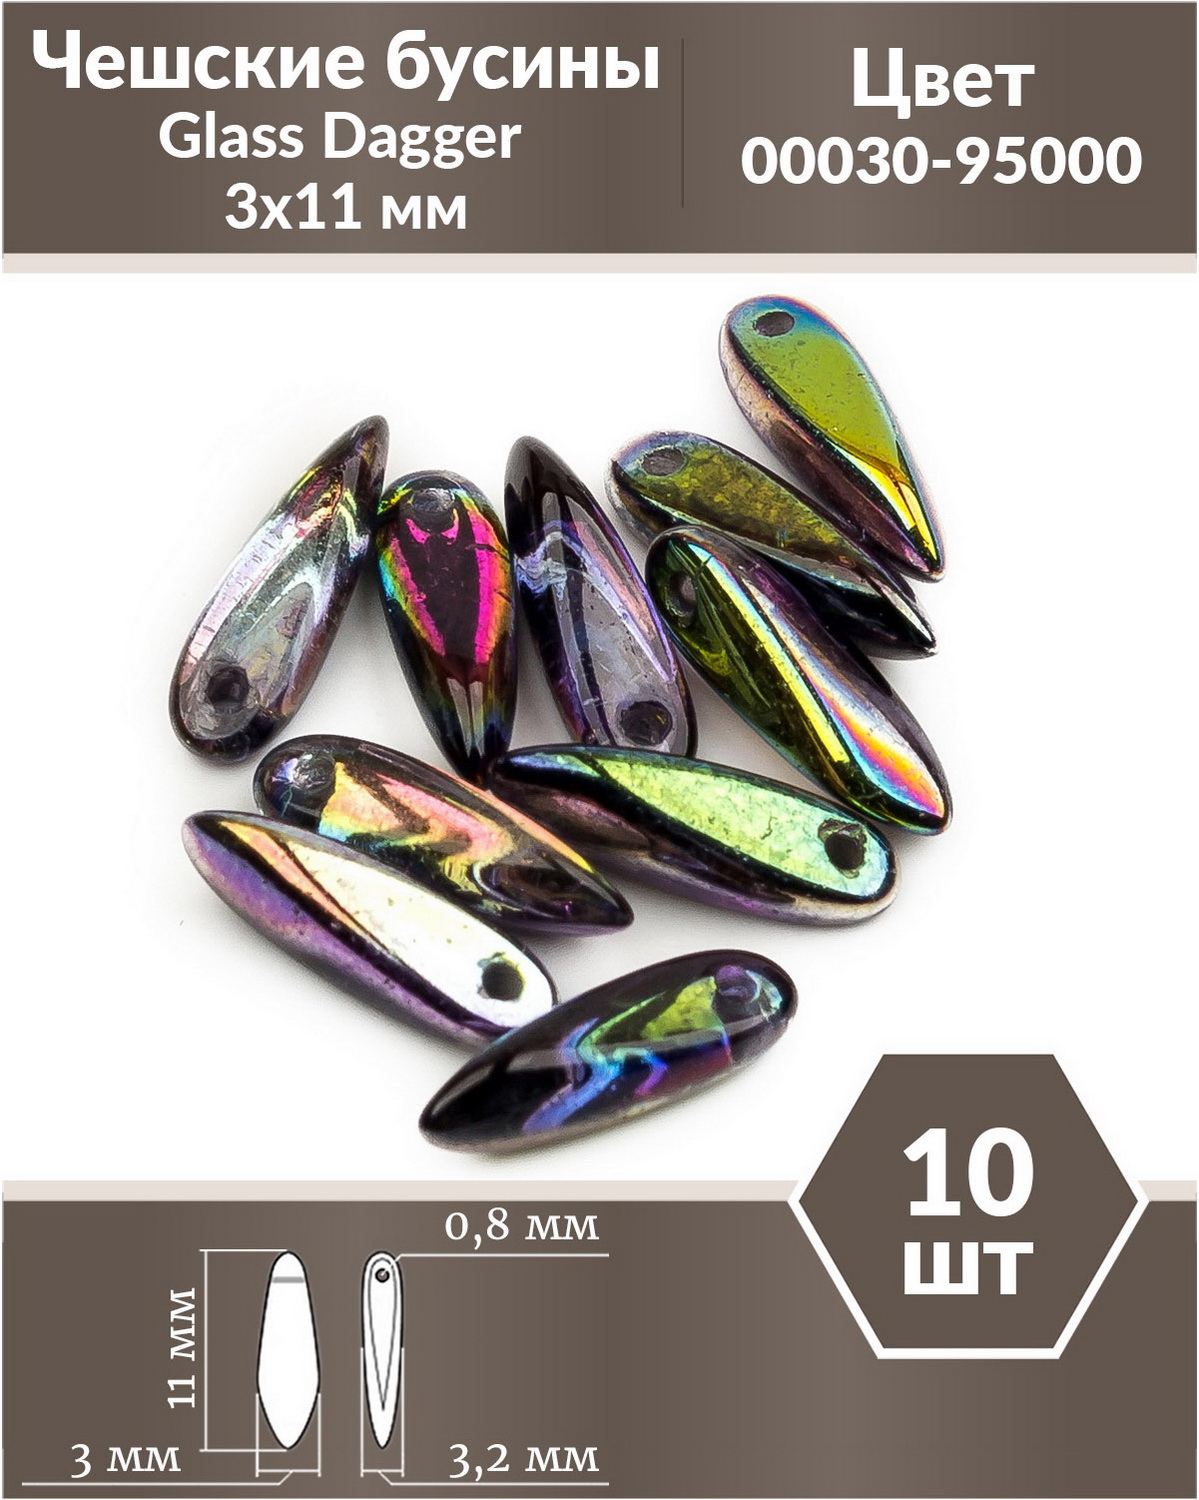 Чешские бусины Czech Beads Glass Dagger, 3х11 мм, Crystal Magic Orchid 10 шт